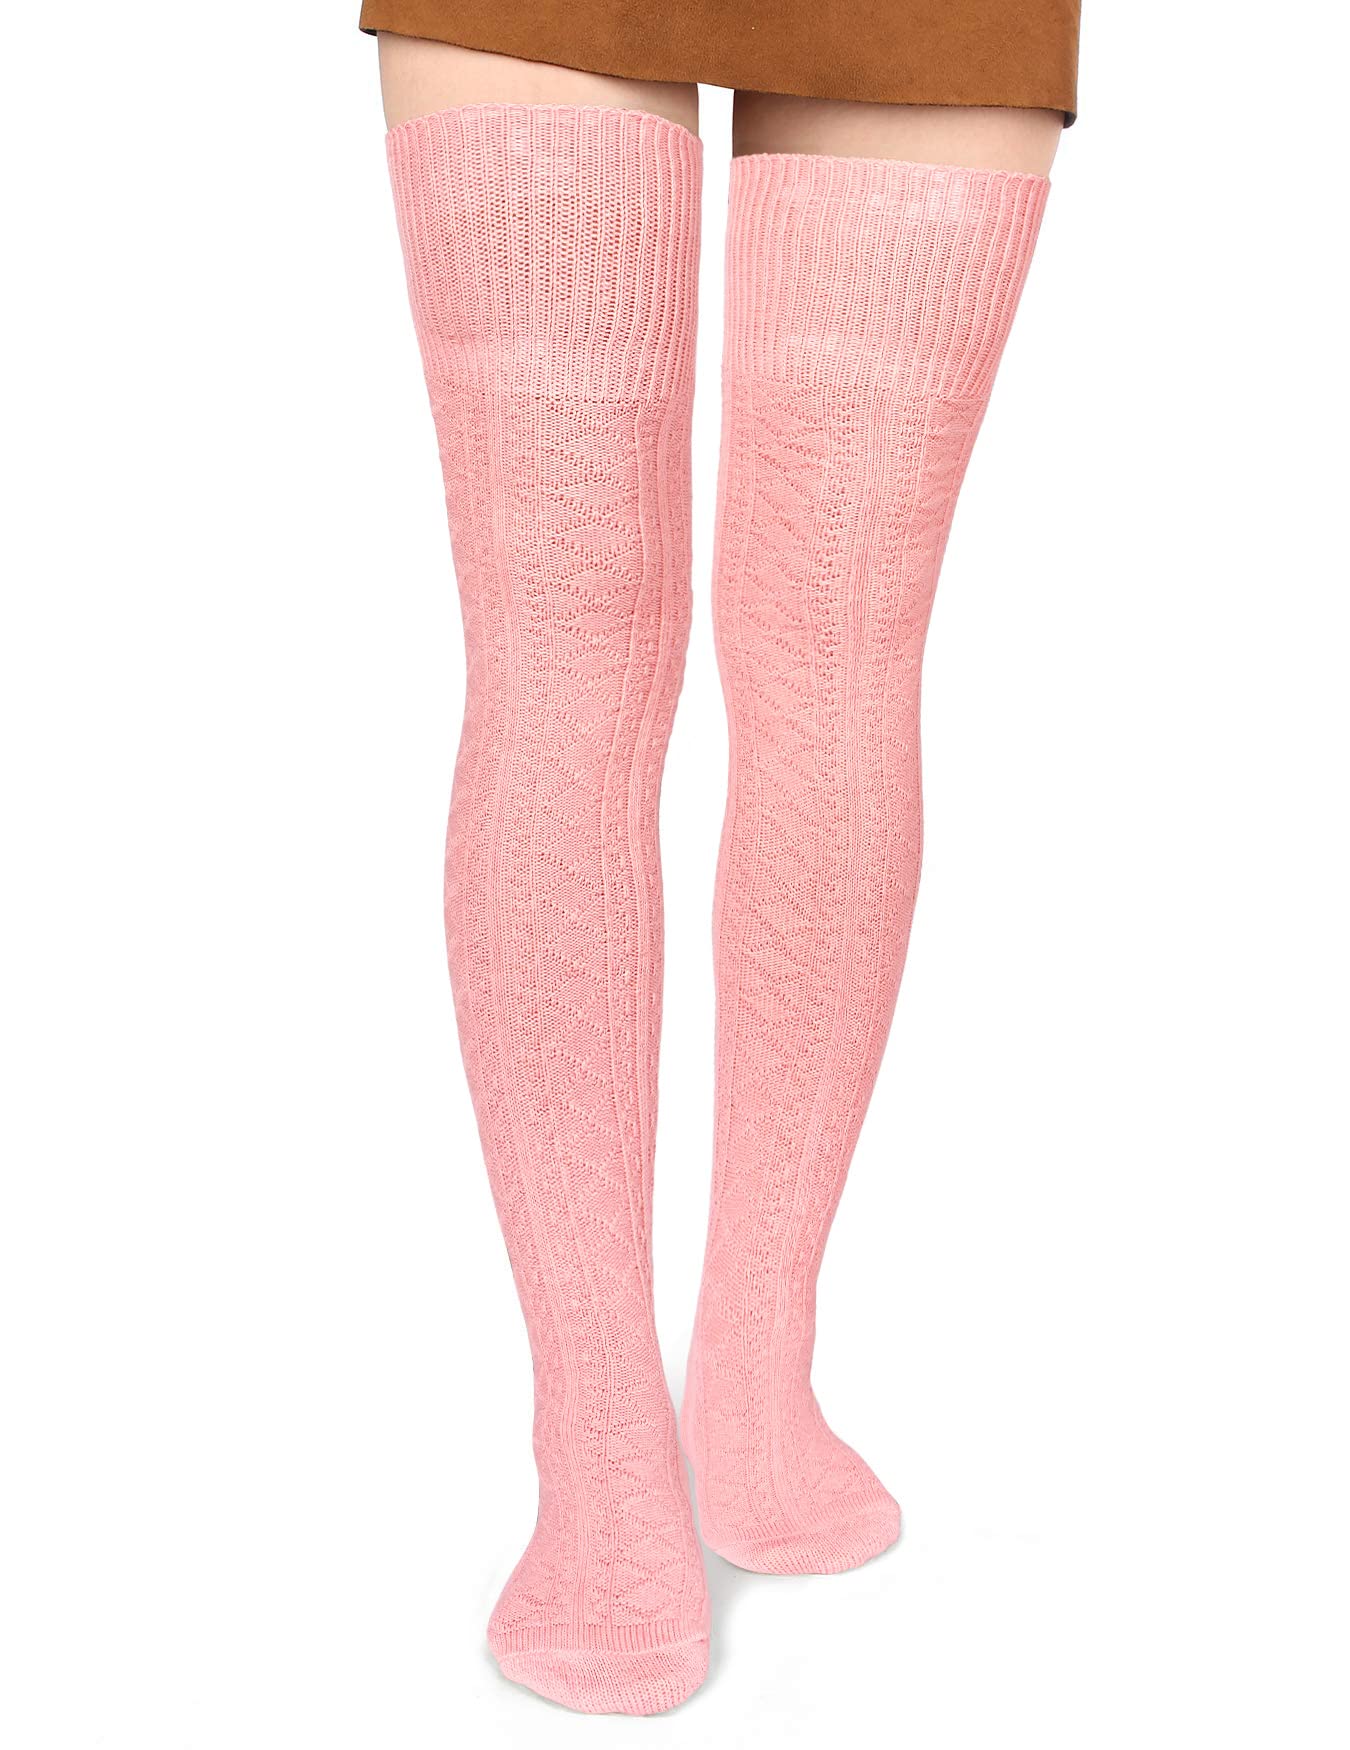 Thigh High Socks Boot Sock Women-Baby Pink - Moon Wood